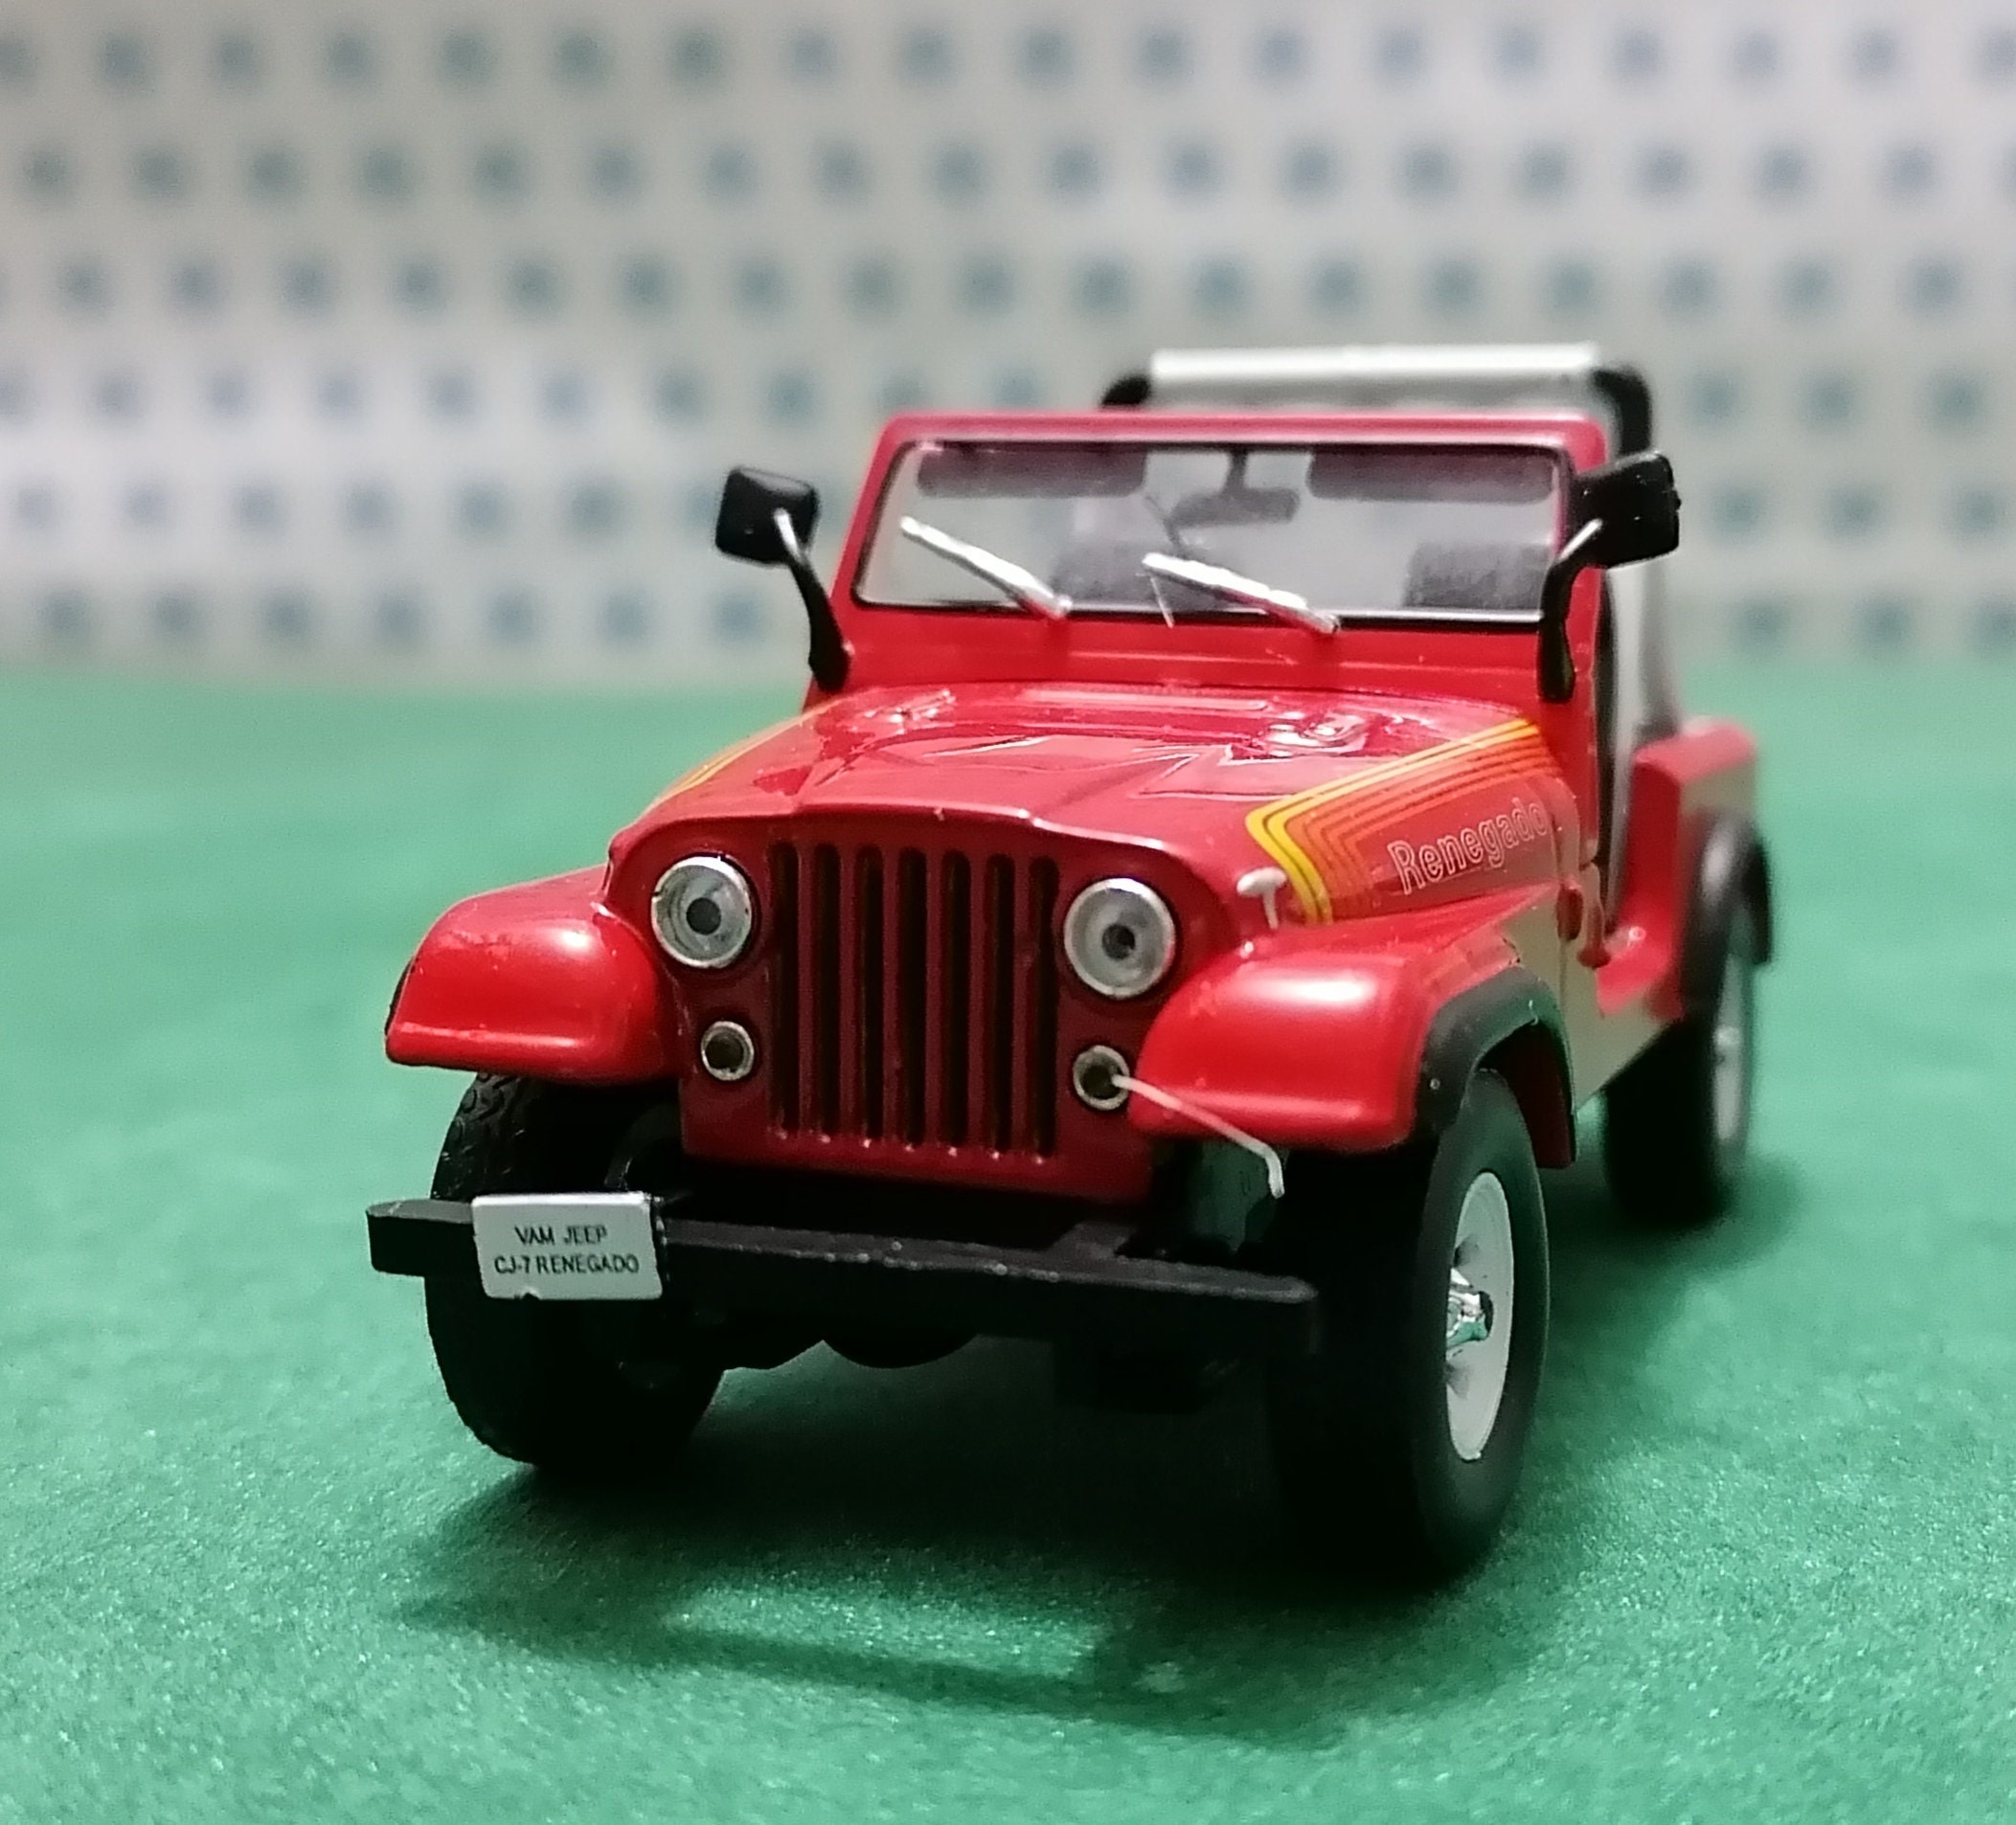 Rare & Hard to Find Burago 1:24 Scale Red Renegade Jeep CJ-7 